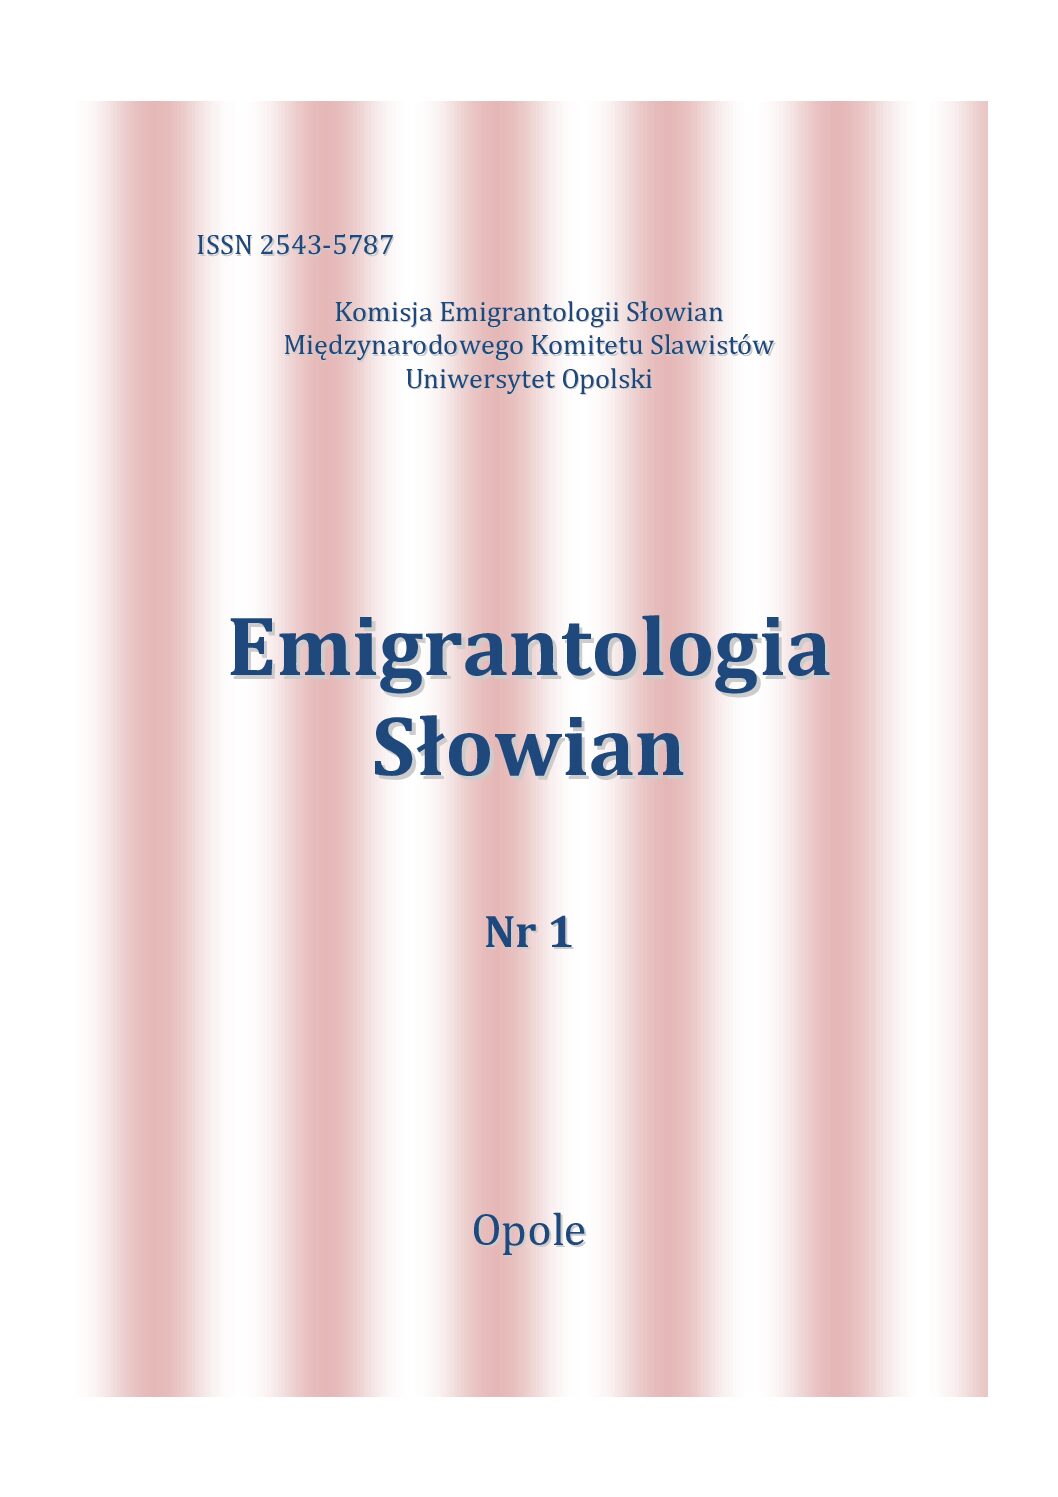 “Emigrantologia Słowian” vol. 1 (2015)